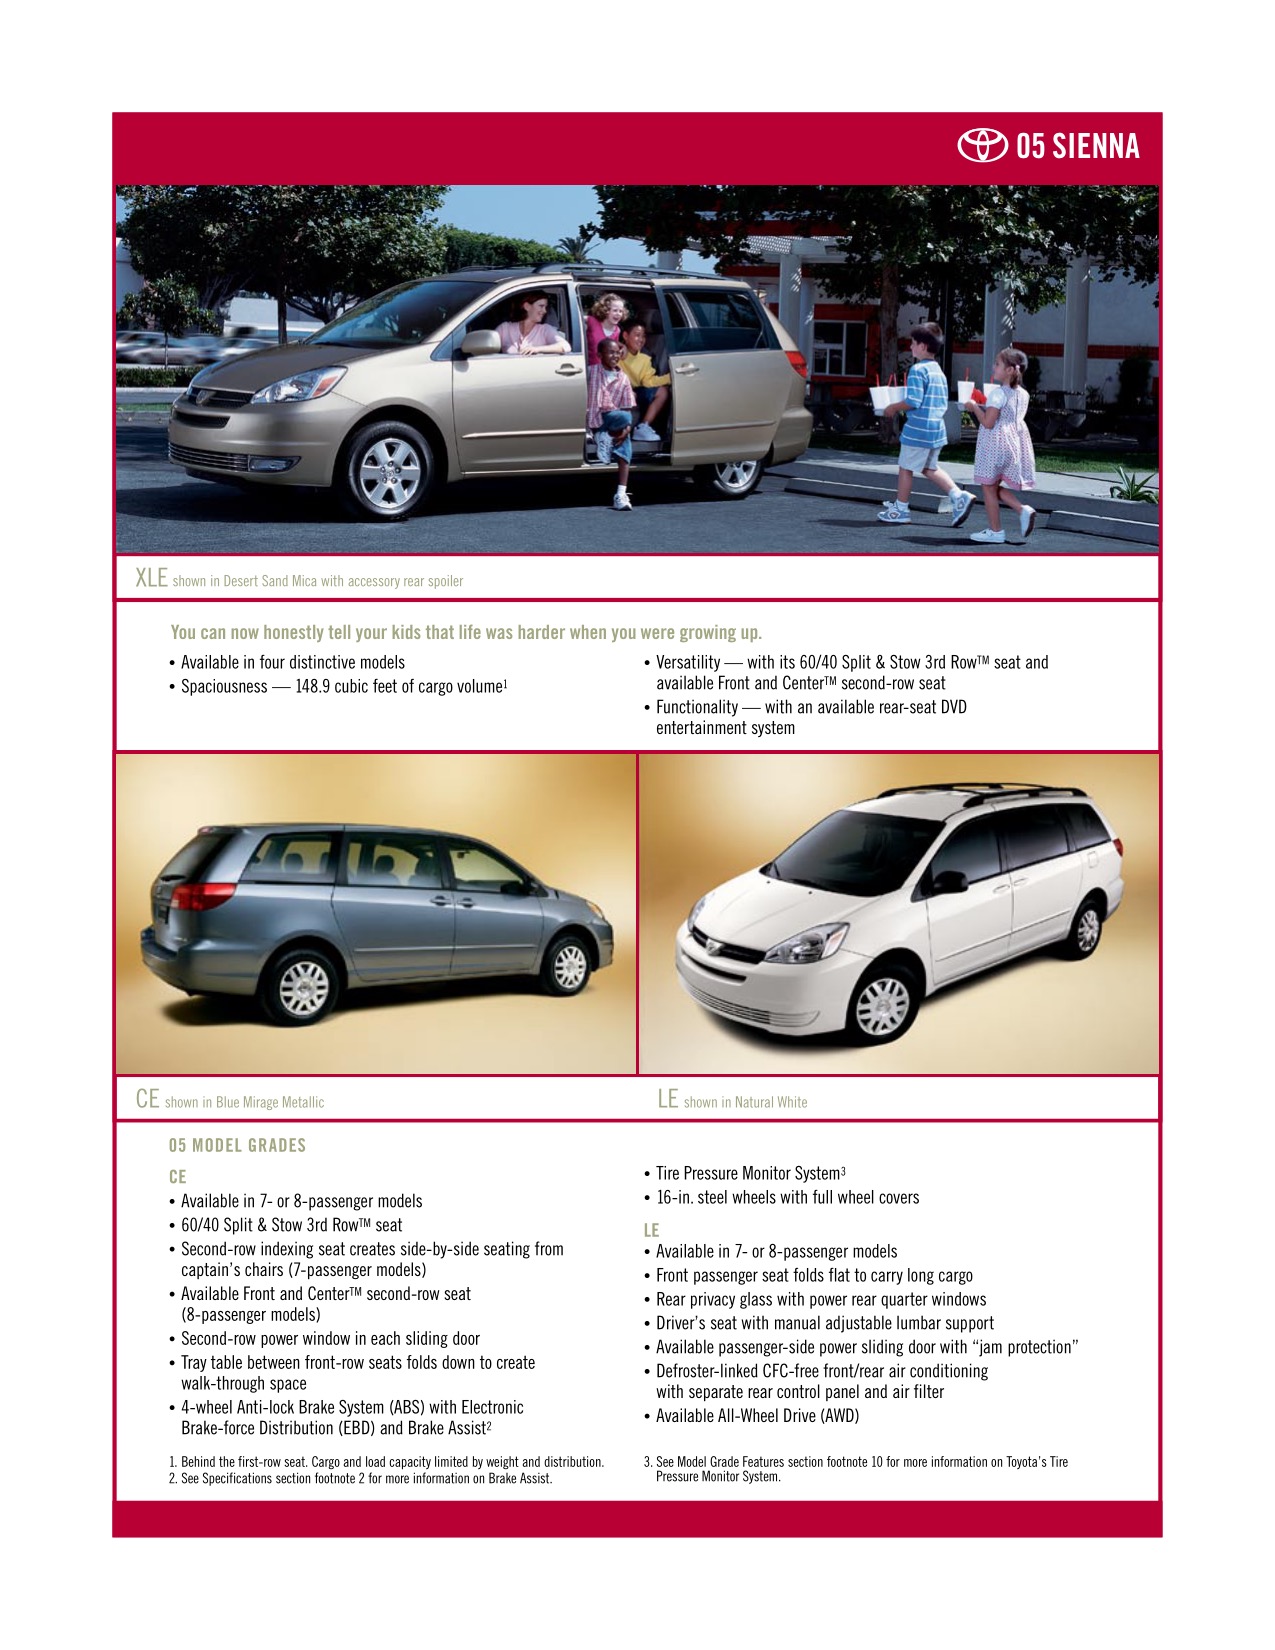 2005 Toyota Sienna Brochure